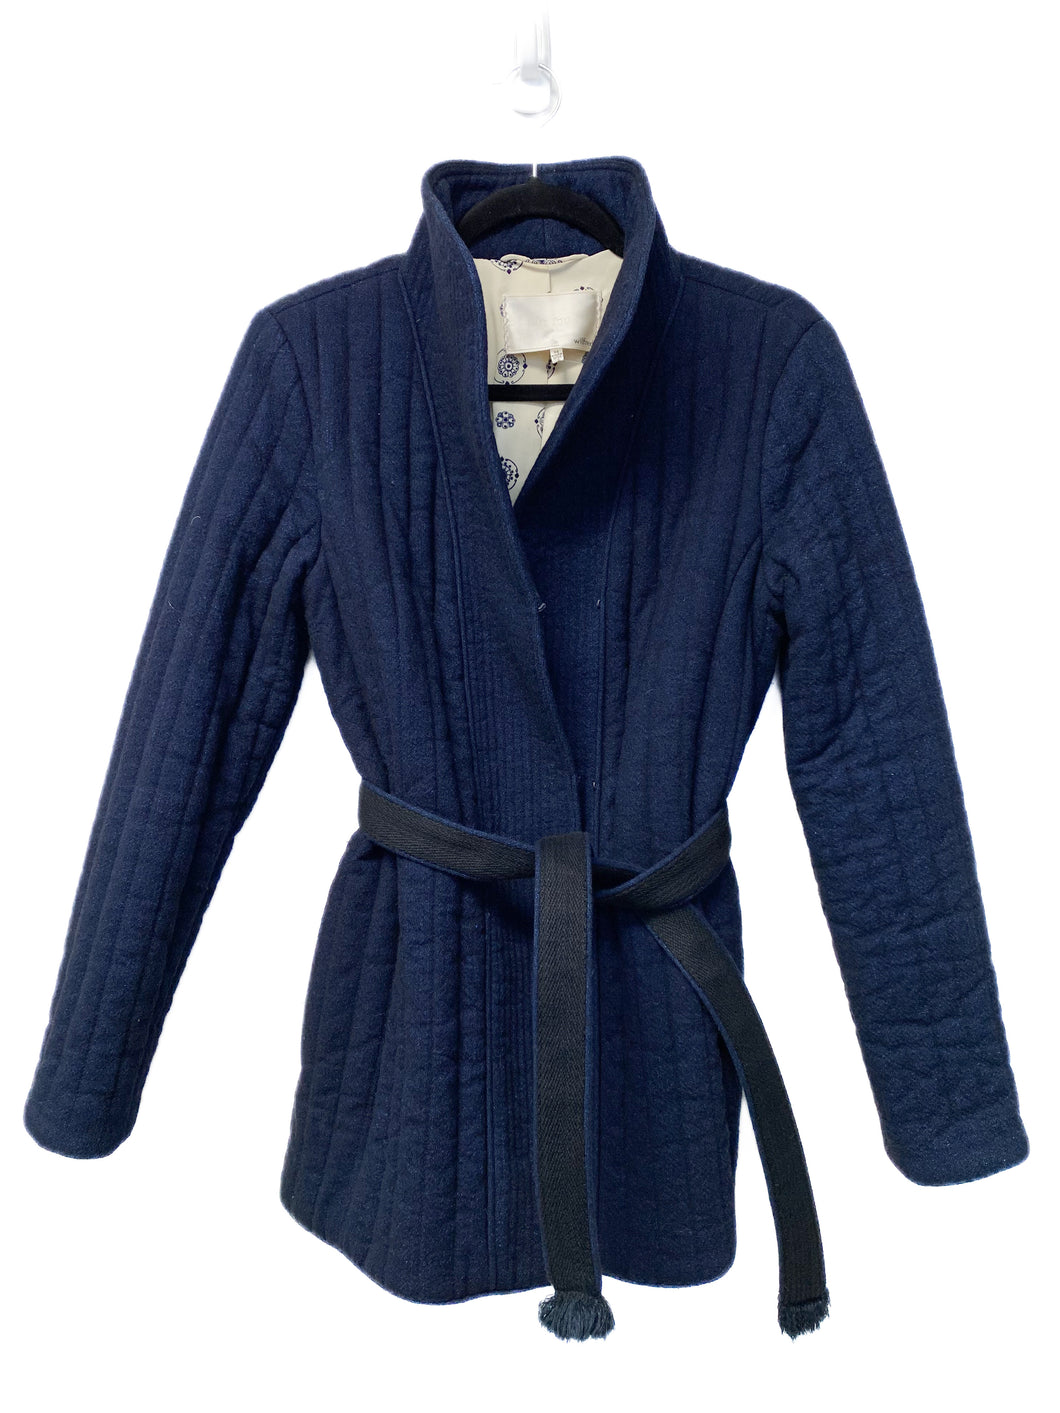 Wilfred Coat (XS)